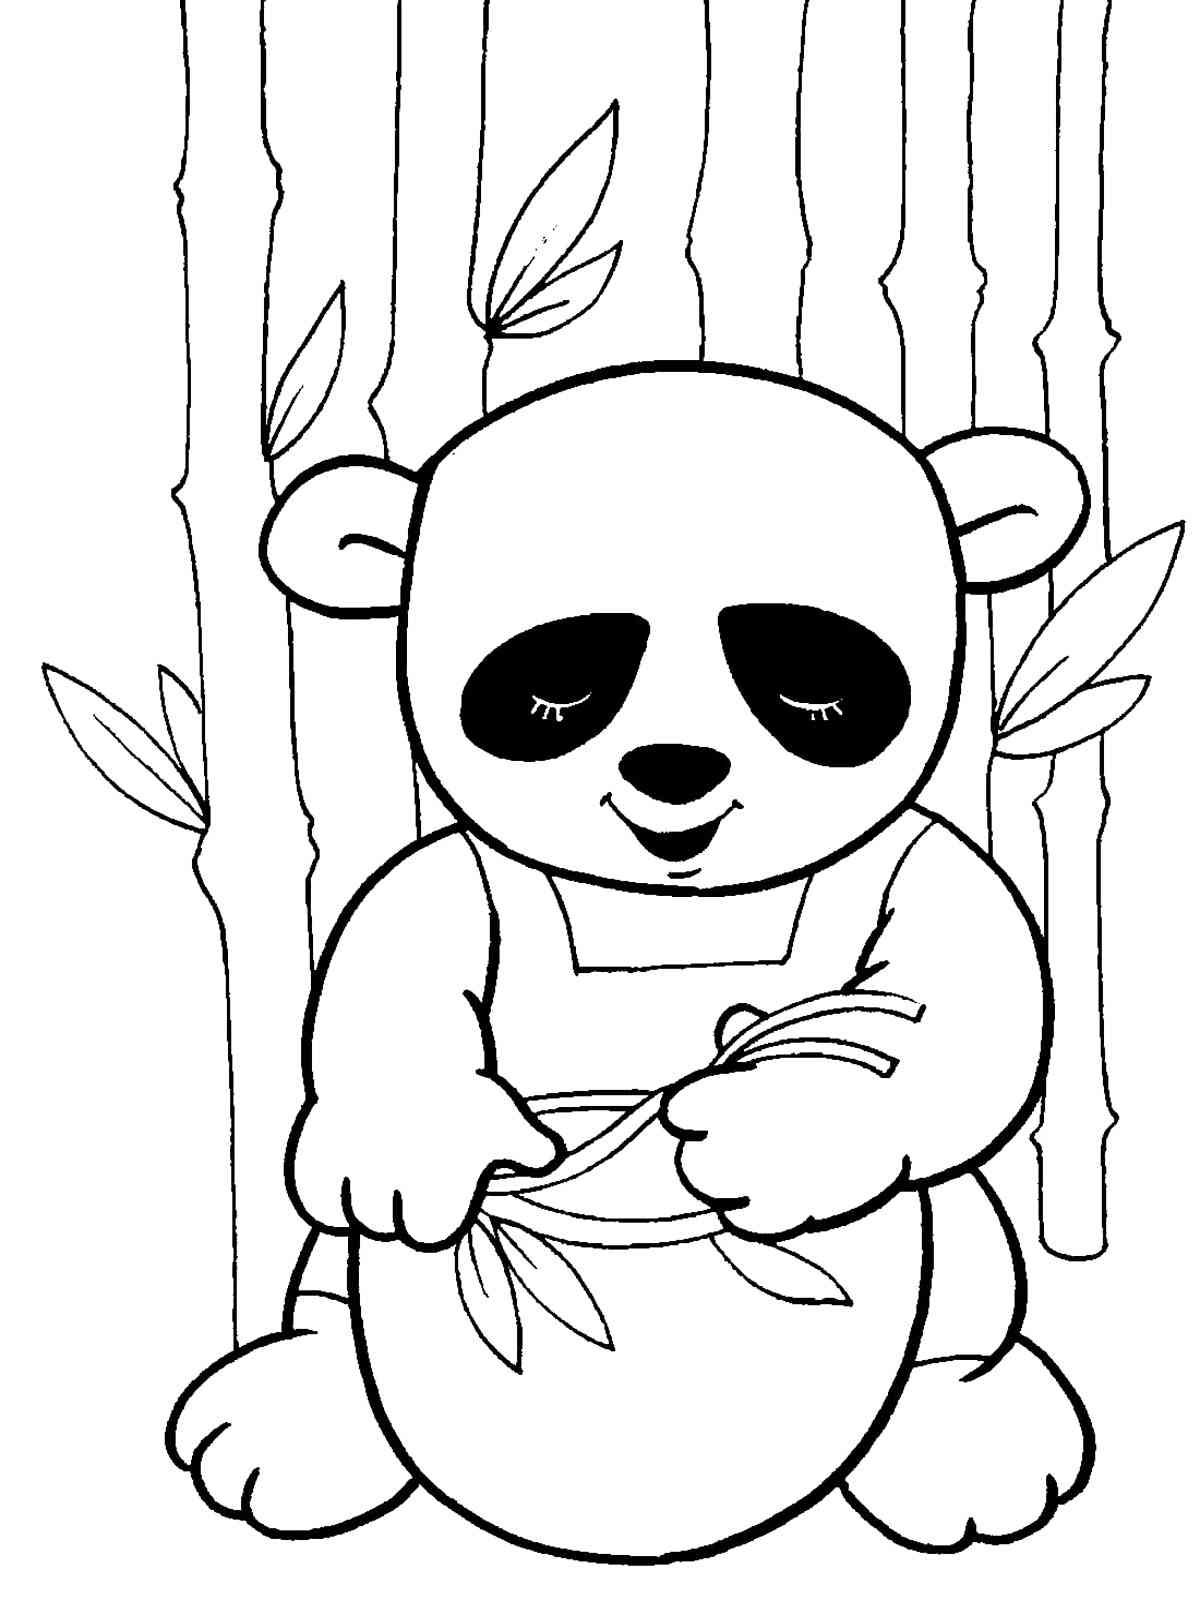 Easy Panda coloring page